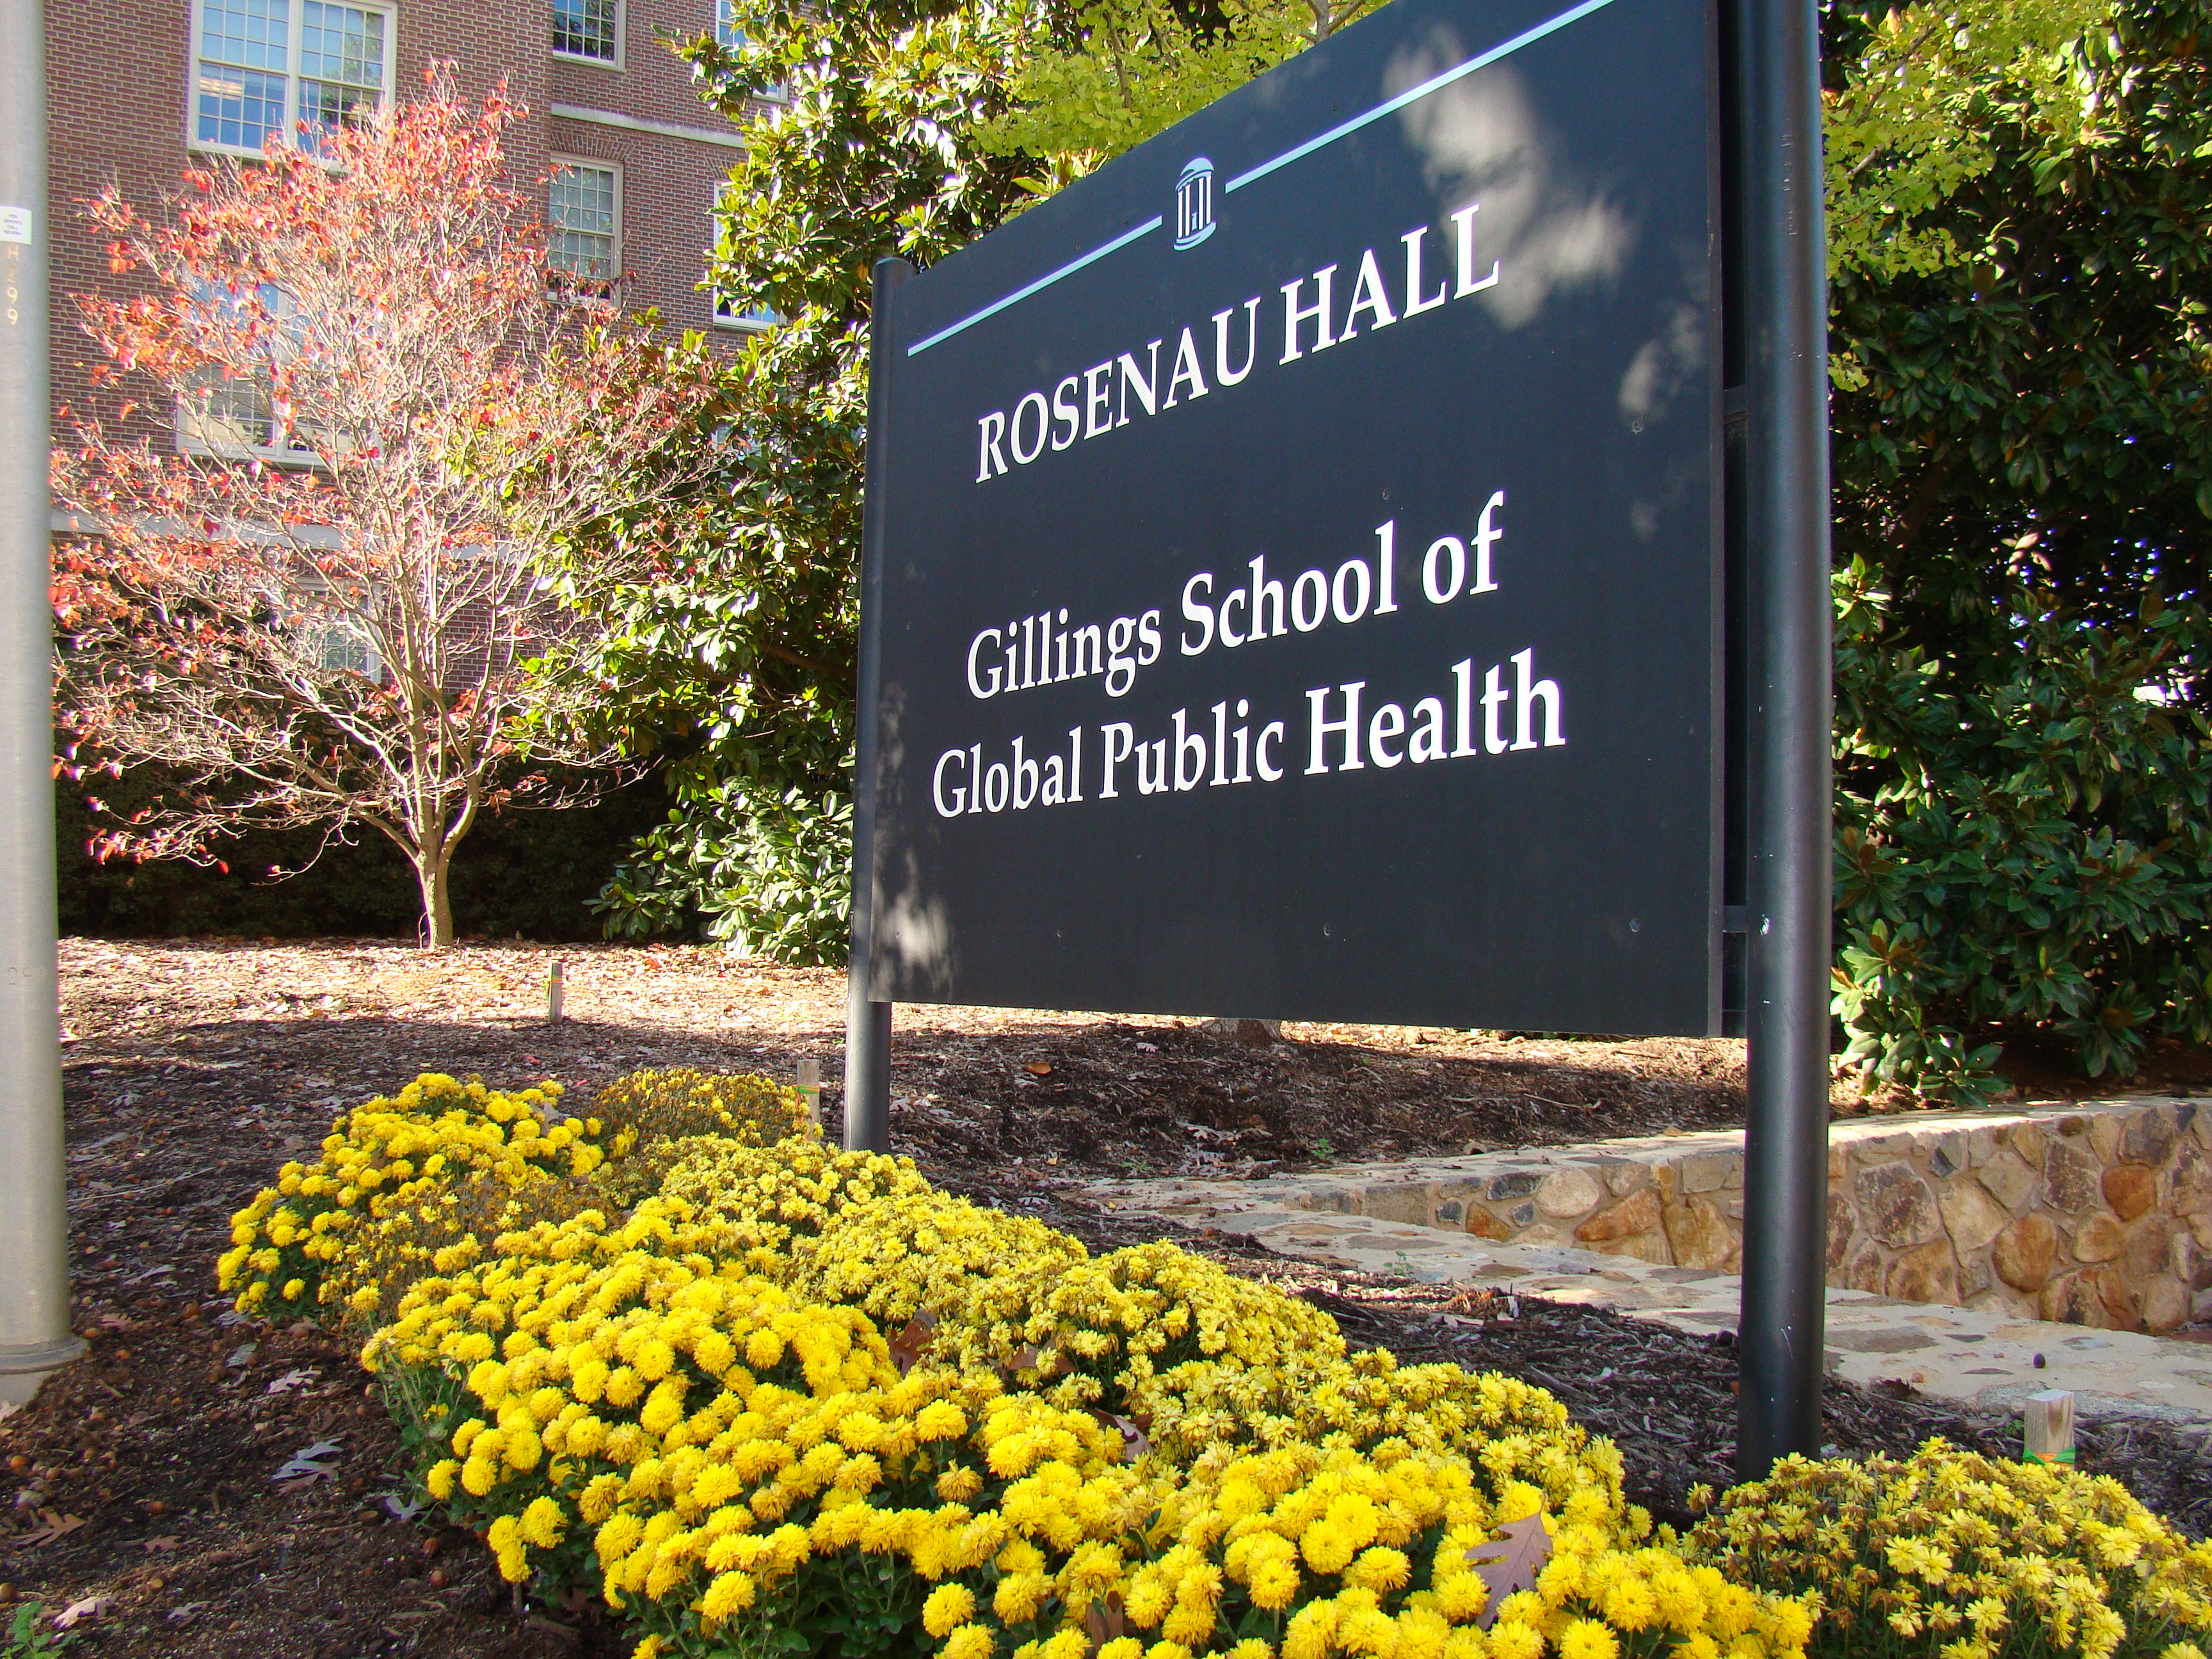 Rosenau Hall was dedicated to UNC's public health school in 1963.